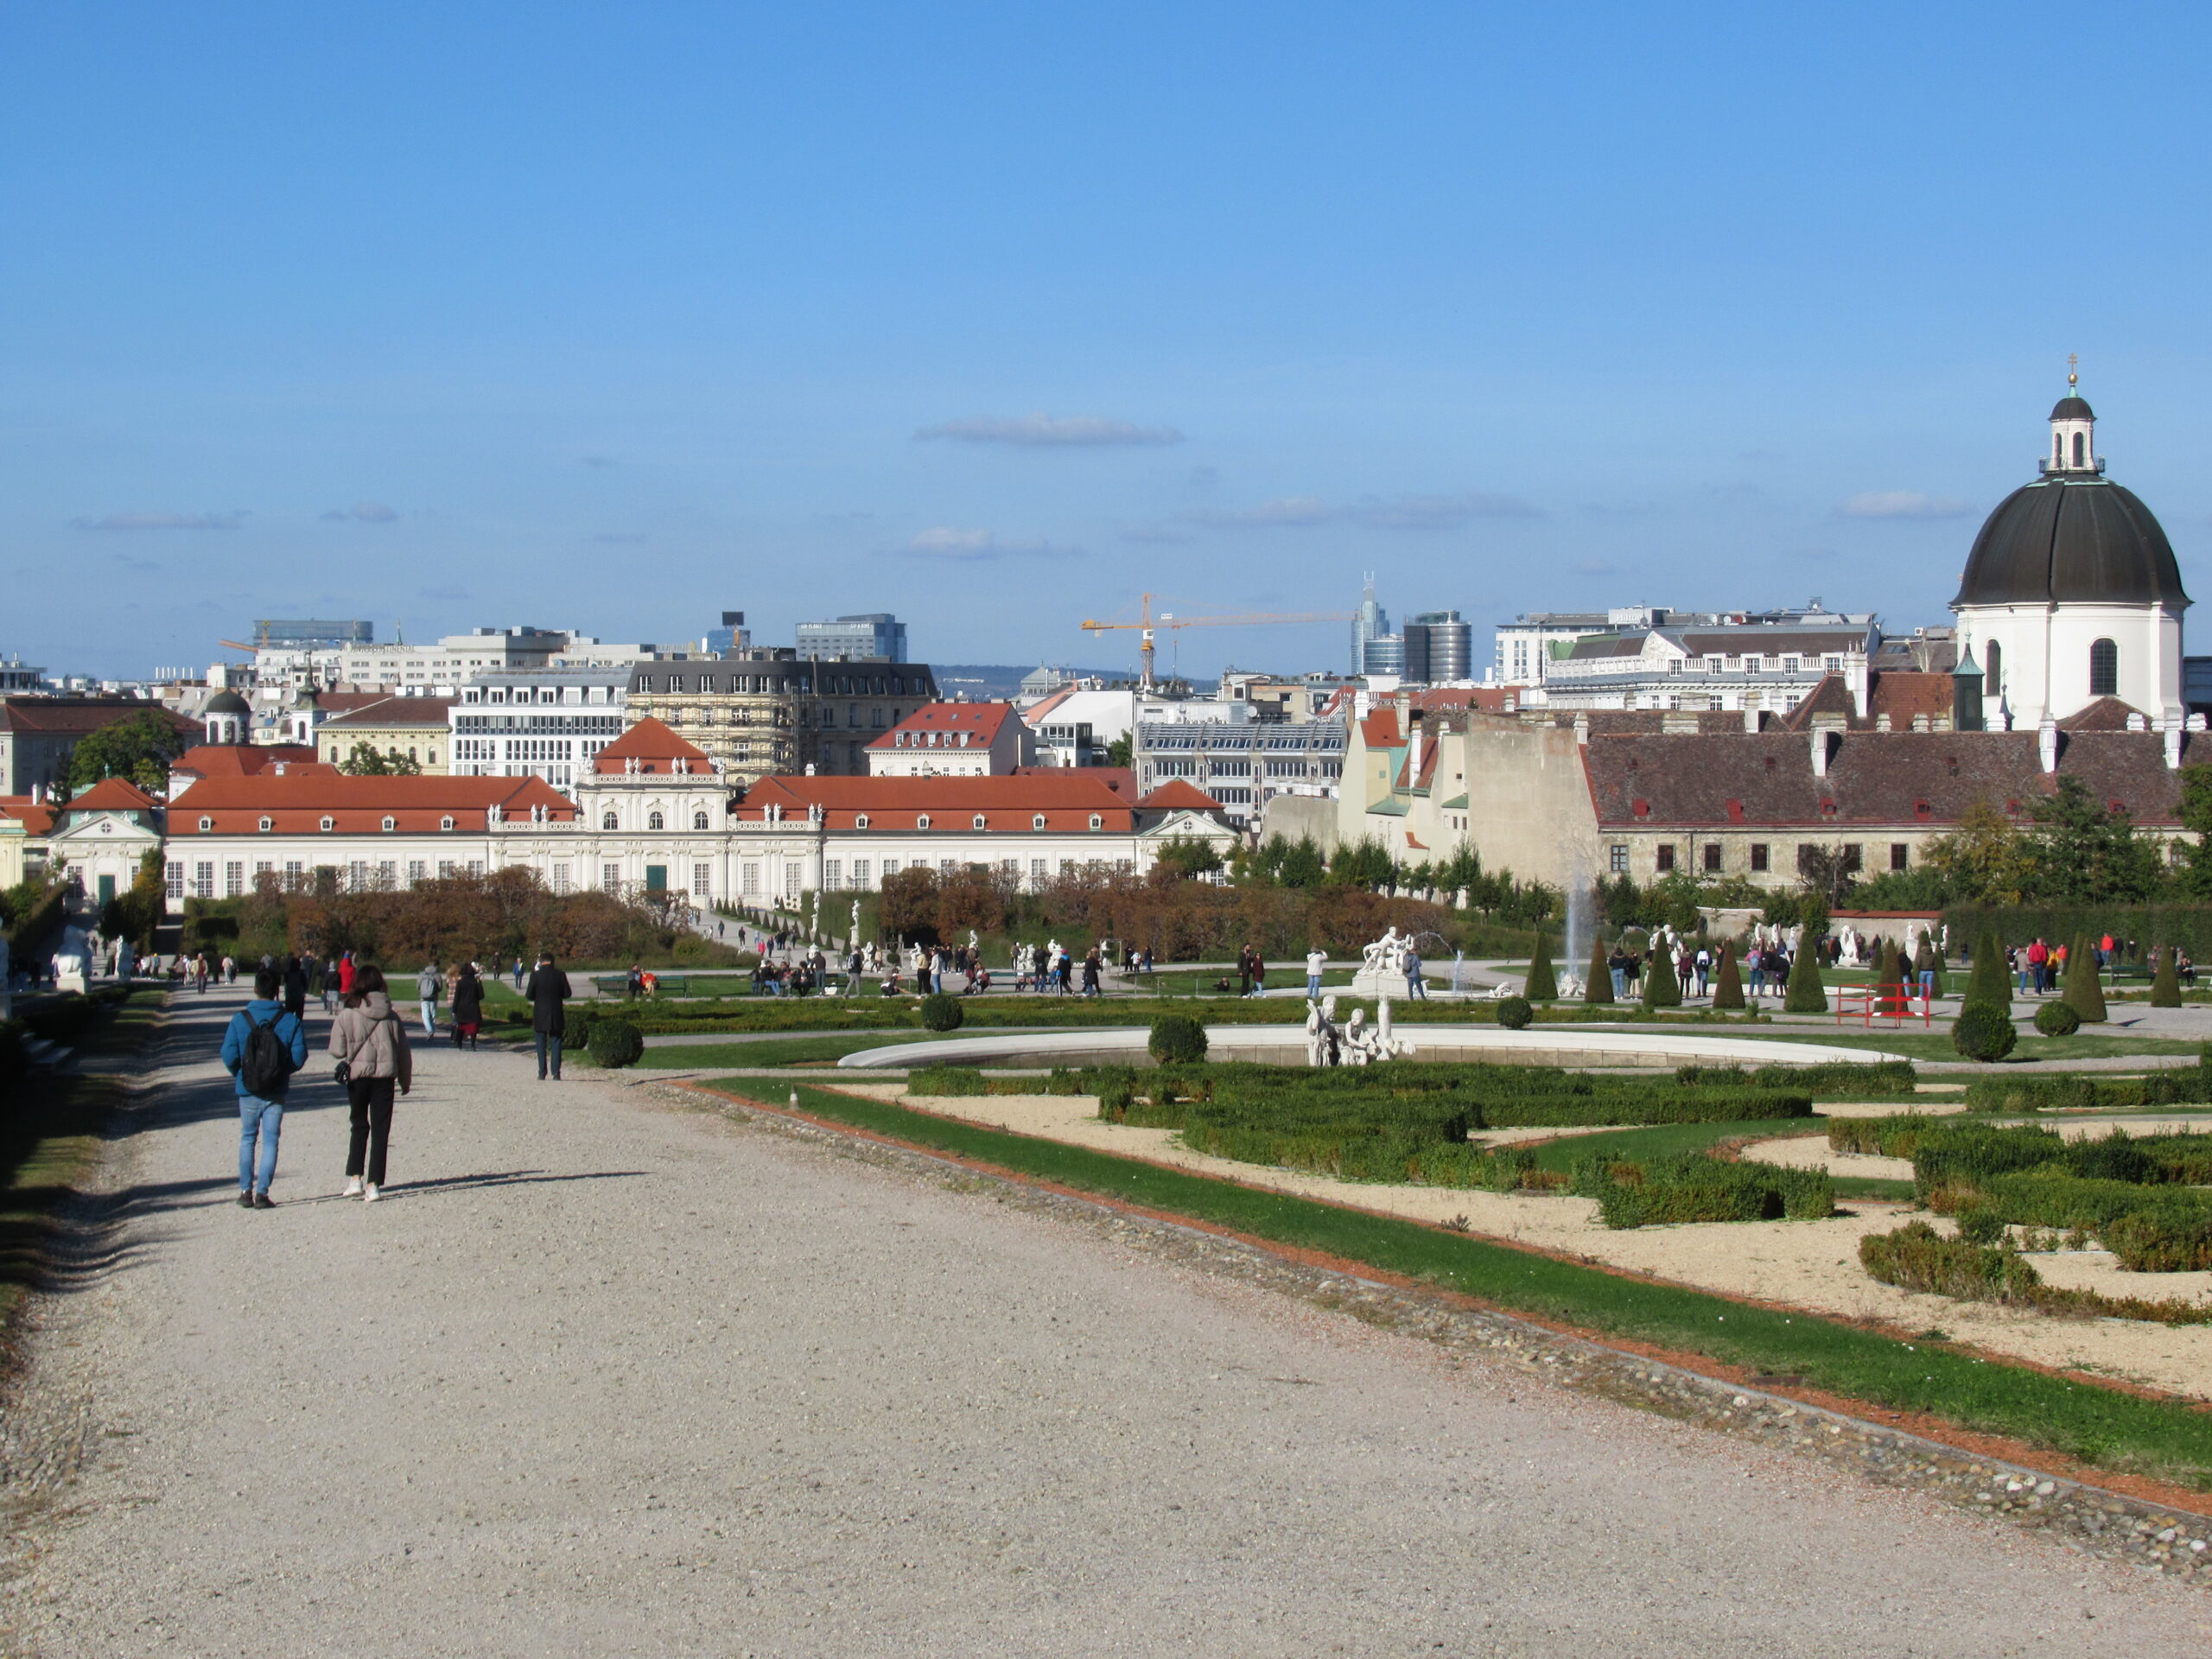 Schlossgarten vom Schloss Belvedere in Wien